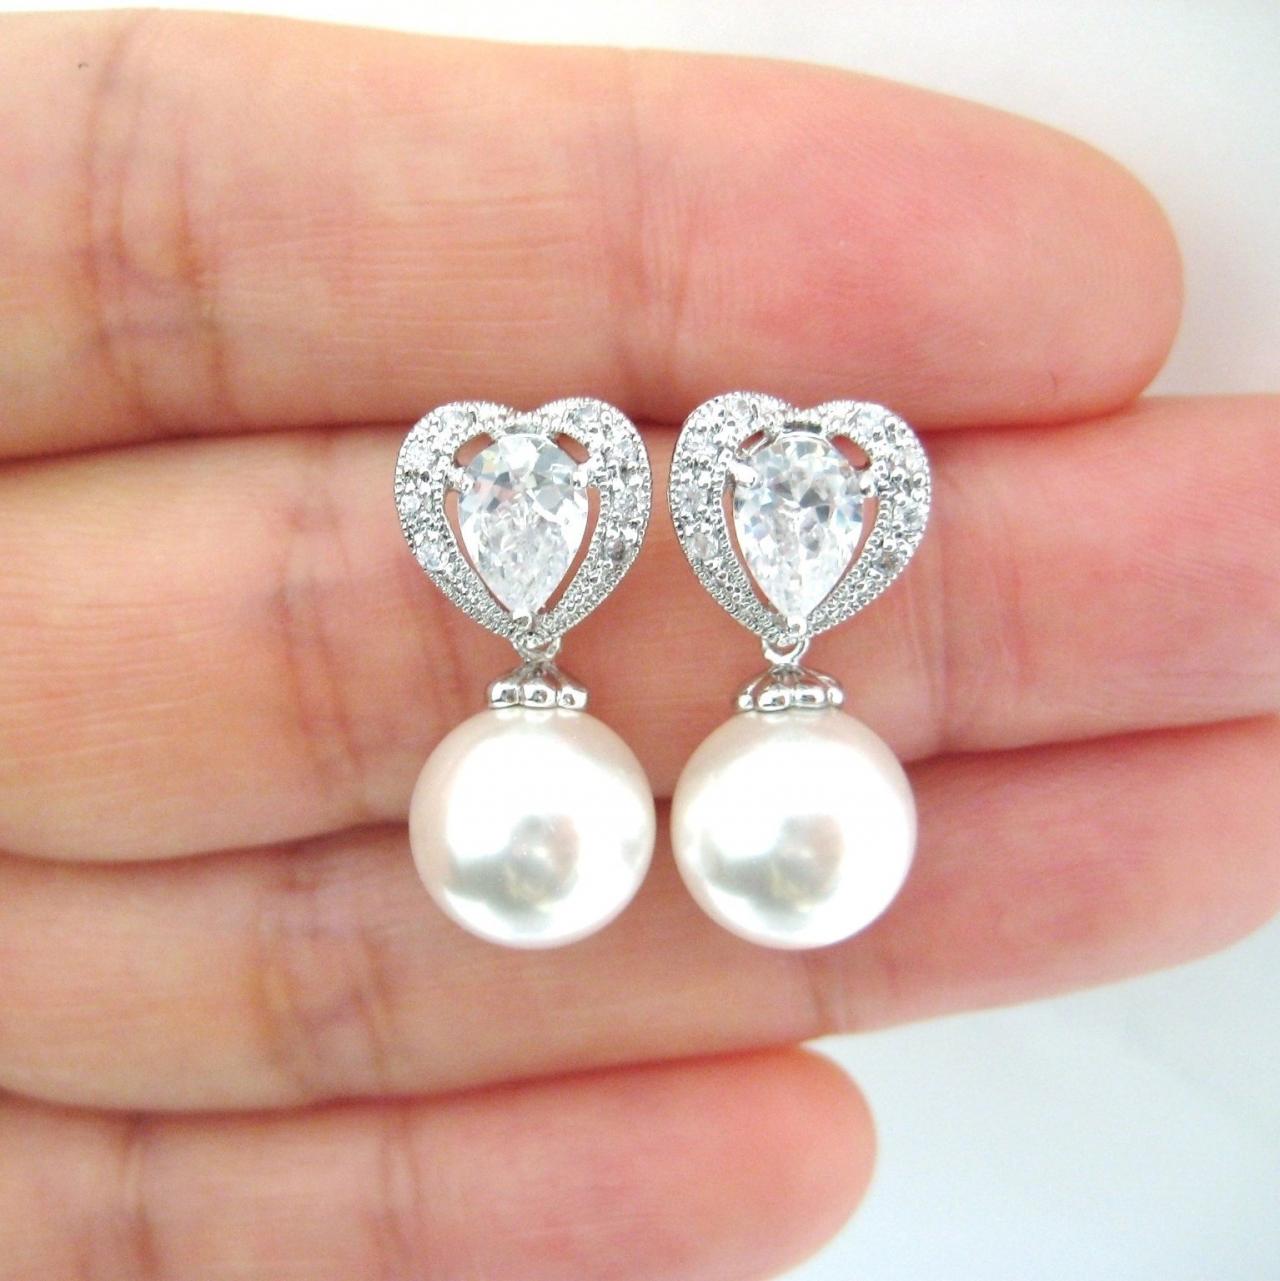 Bridal Pearl Earrings Wedding Earrings Swarovski 10mm Round Pearl Heart-shaped Cubic Zirconia Earrings Bridesmaid Gift (e309)